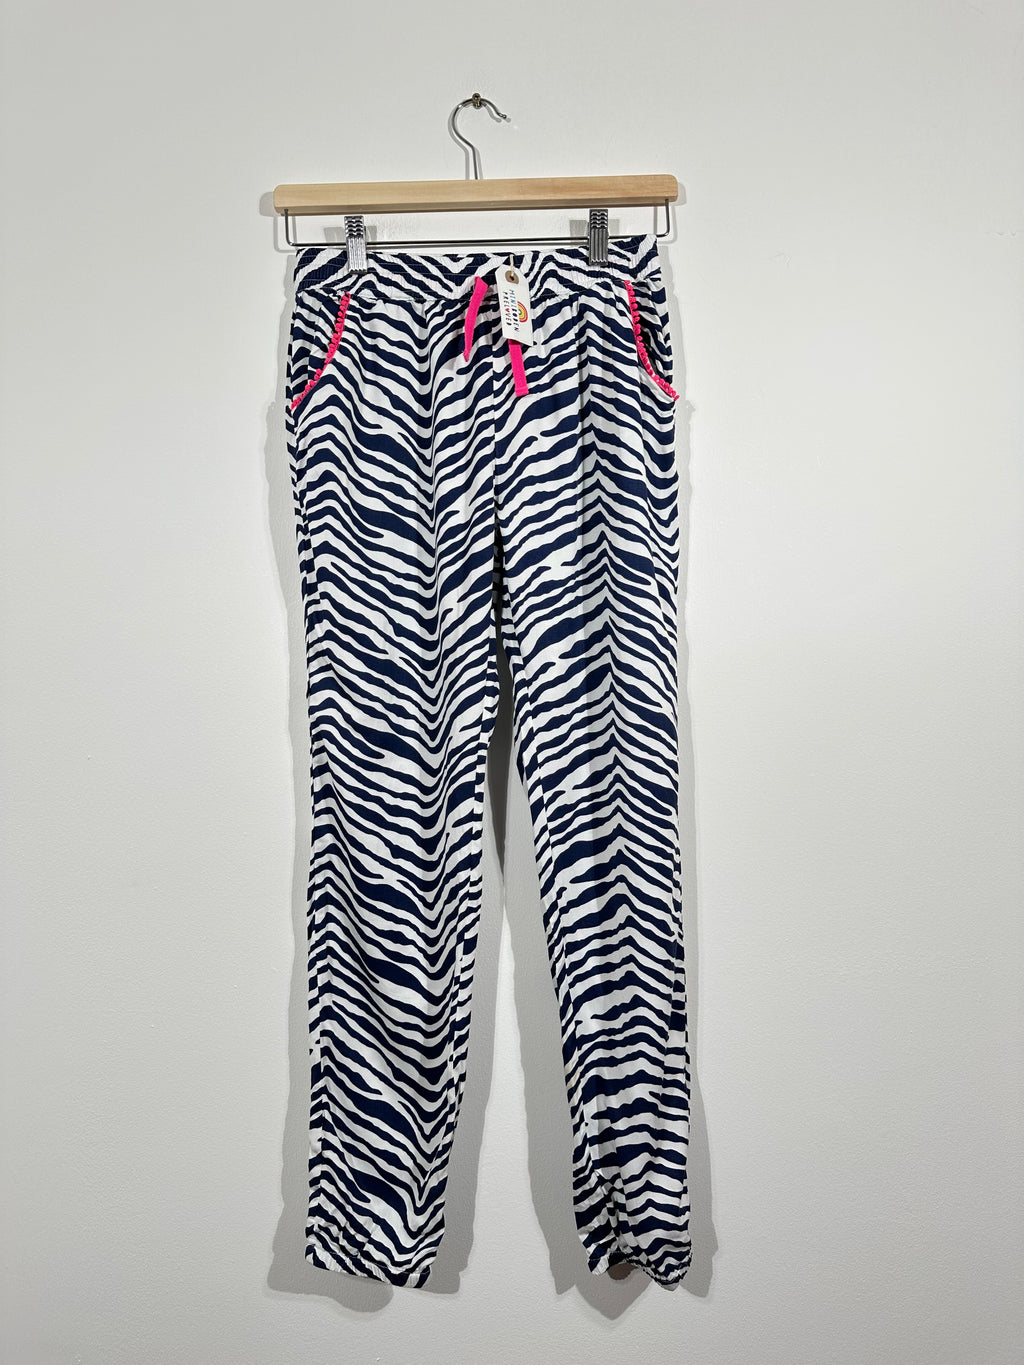 Zebra Print Holiday Trousers (12 Years)